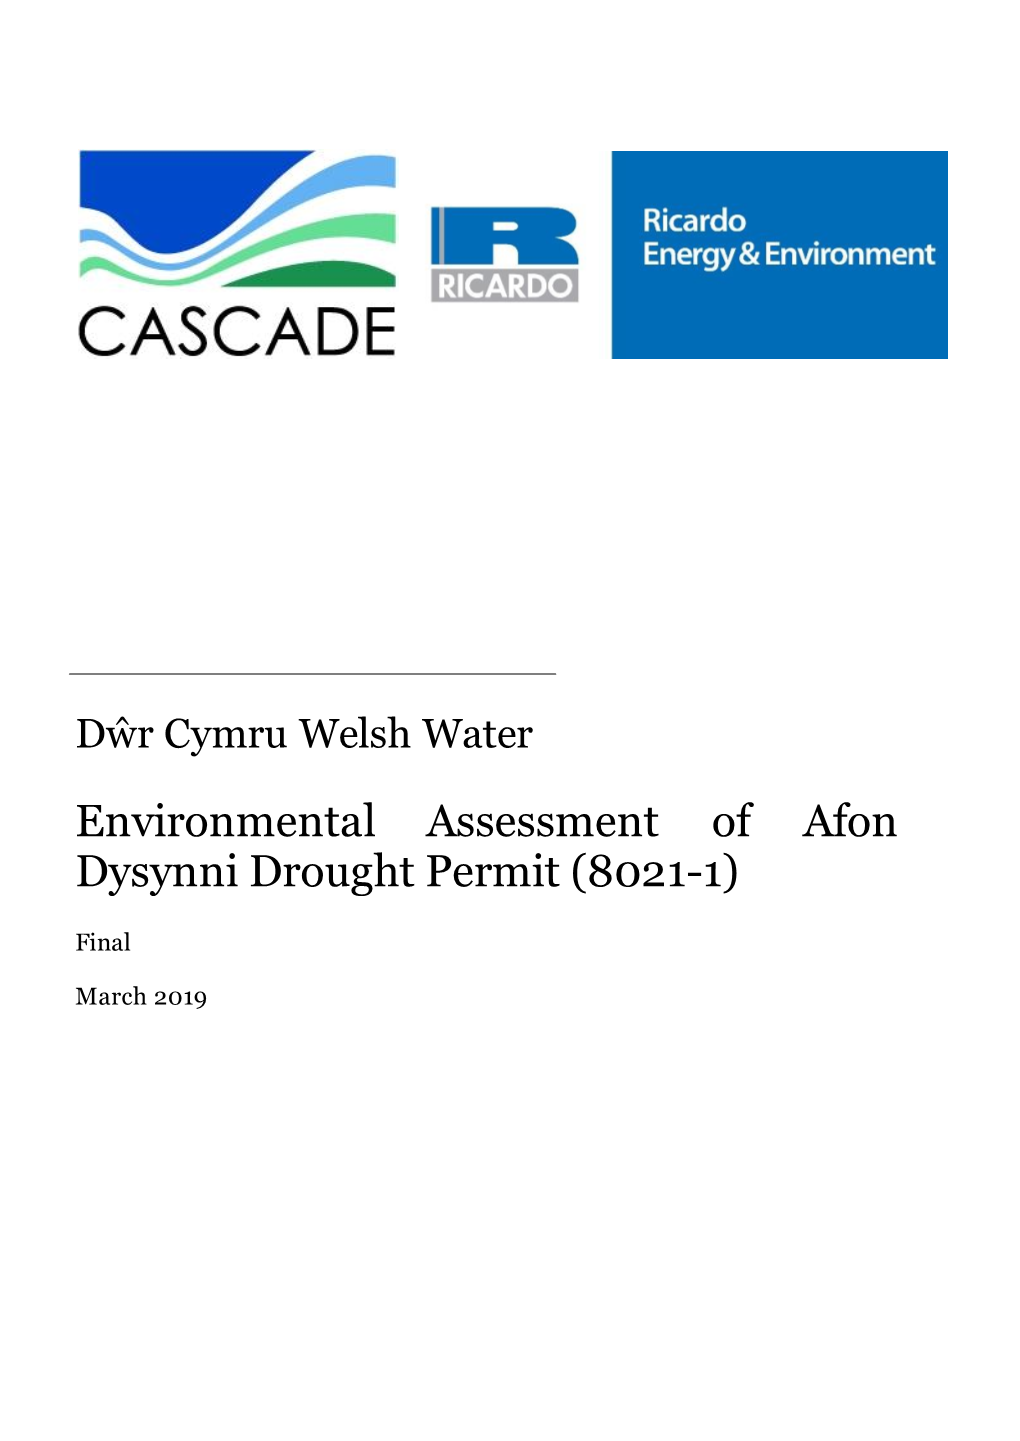 Environmental Assessment of Afon Dysynni Drought Permit (8021-1)